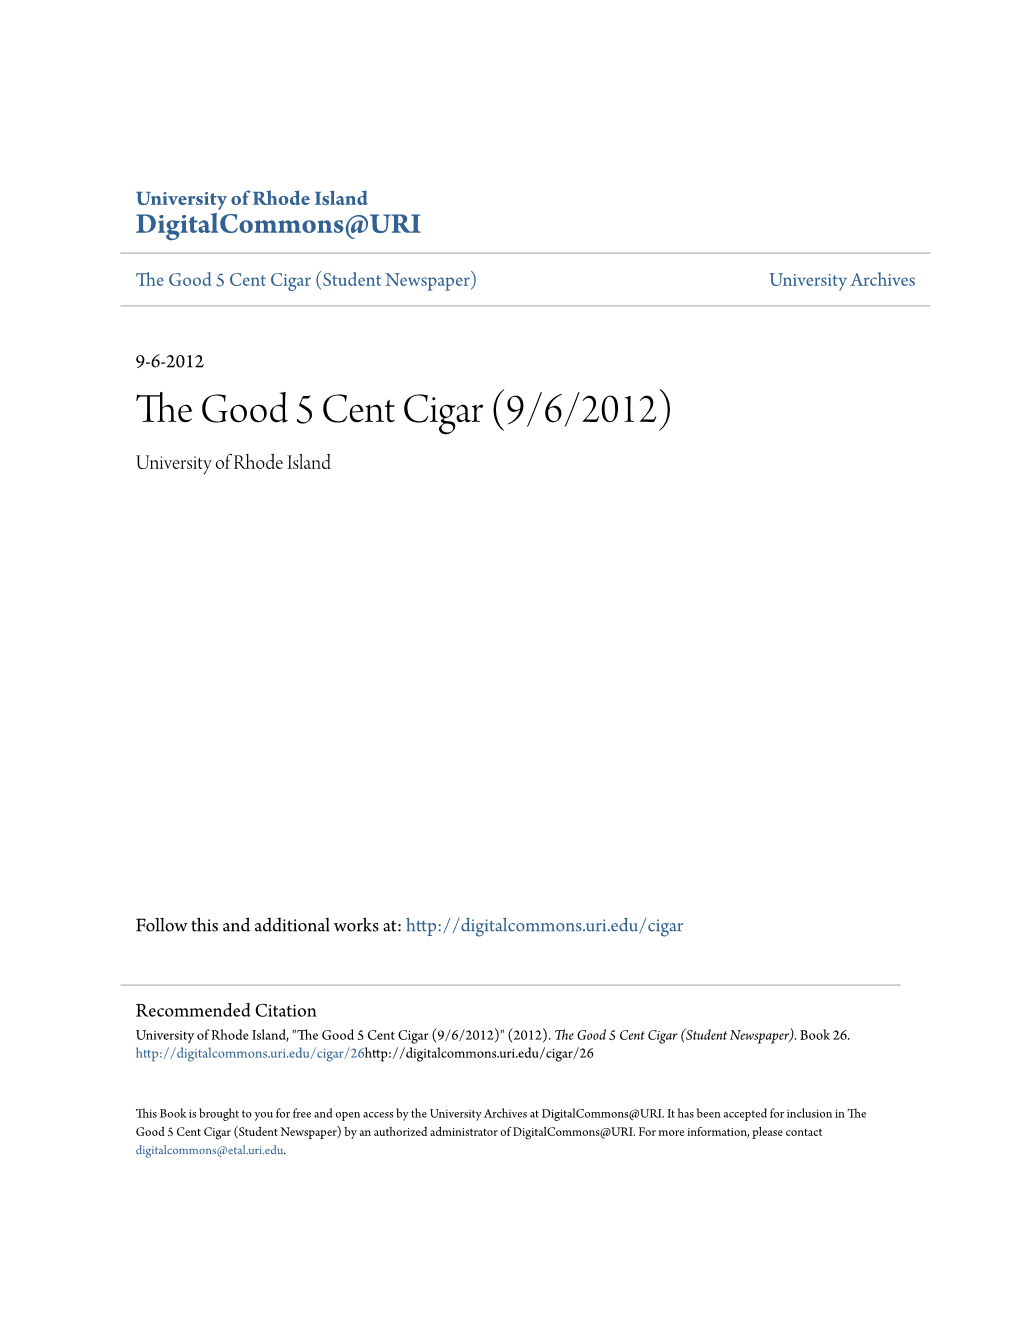 The Good 5 Cent Cigar (9/6/2012) University of Rhode Island